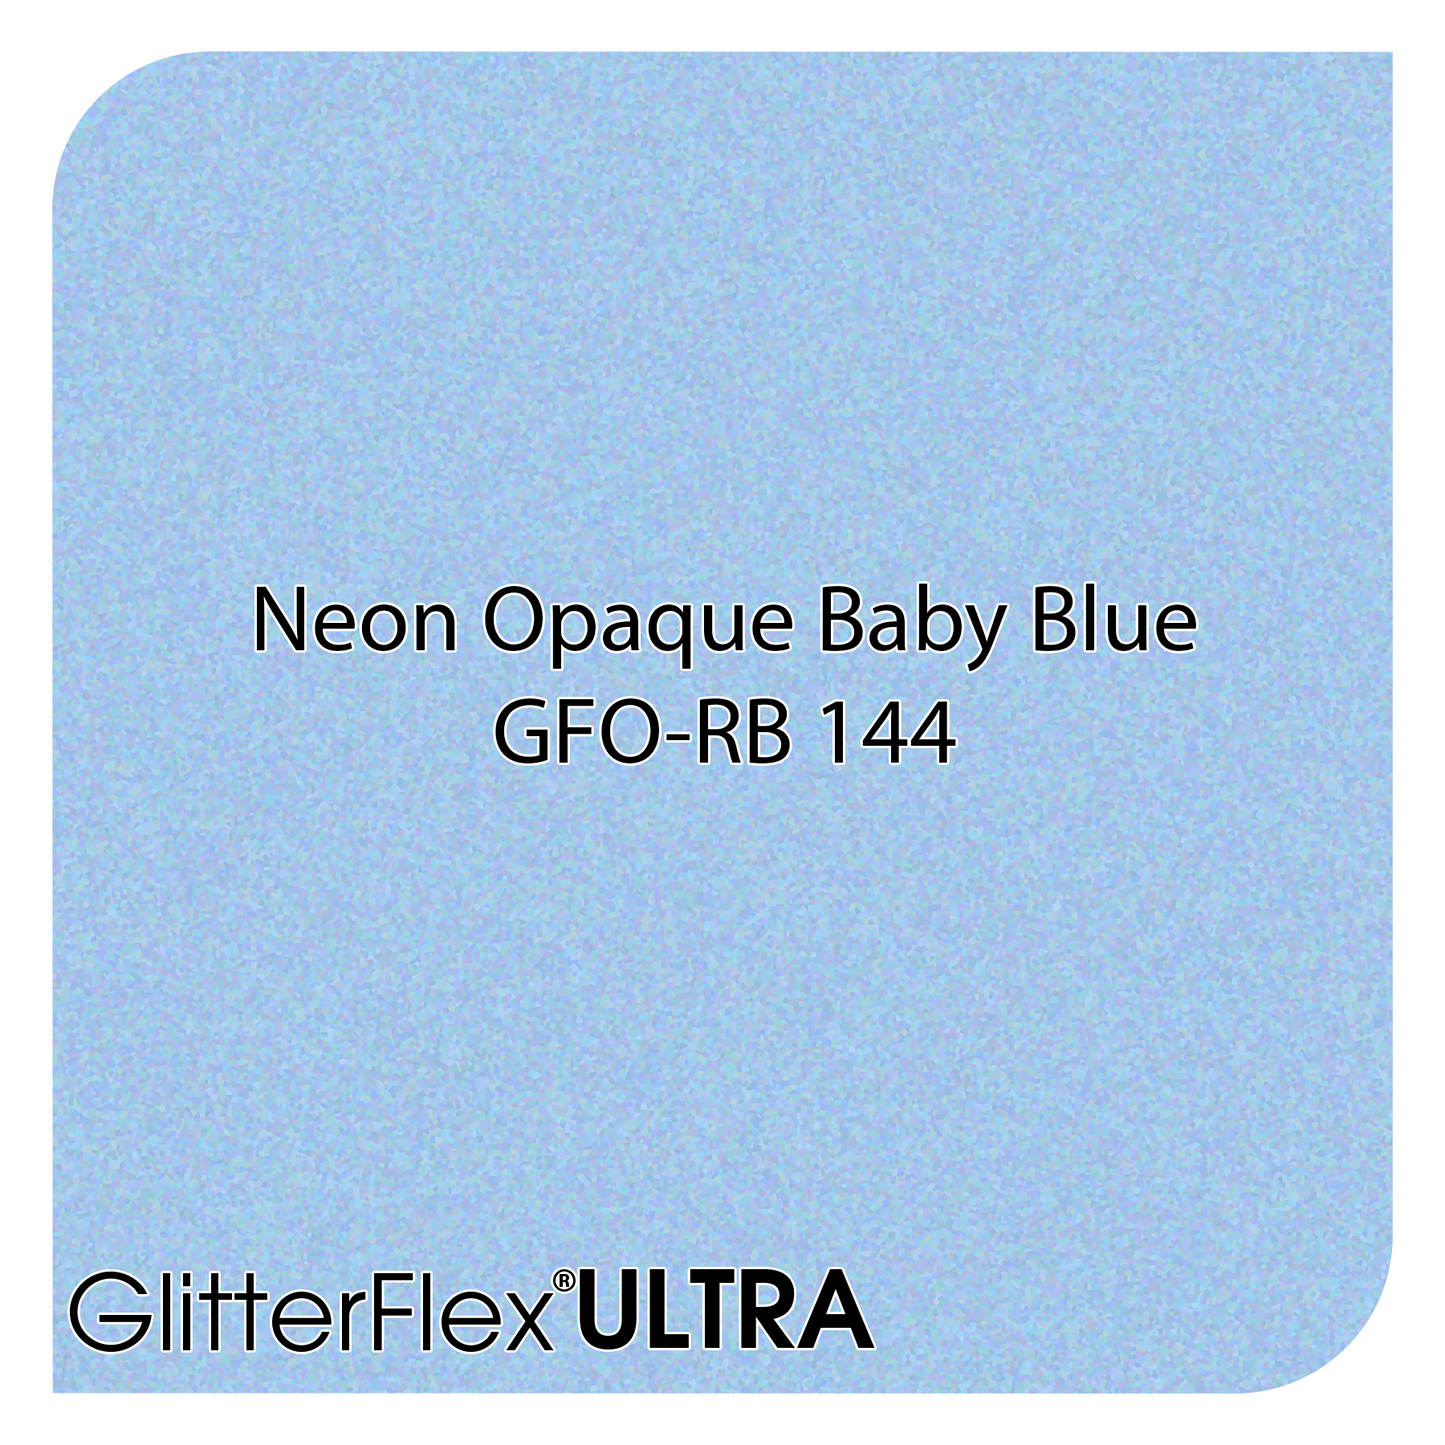 GLITTERFLEX® ULTRA NEON OPAQUES - 12" x 20" 20 Sheets